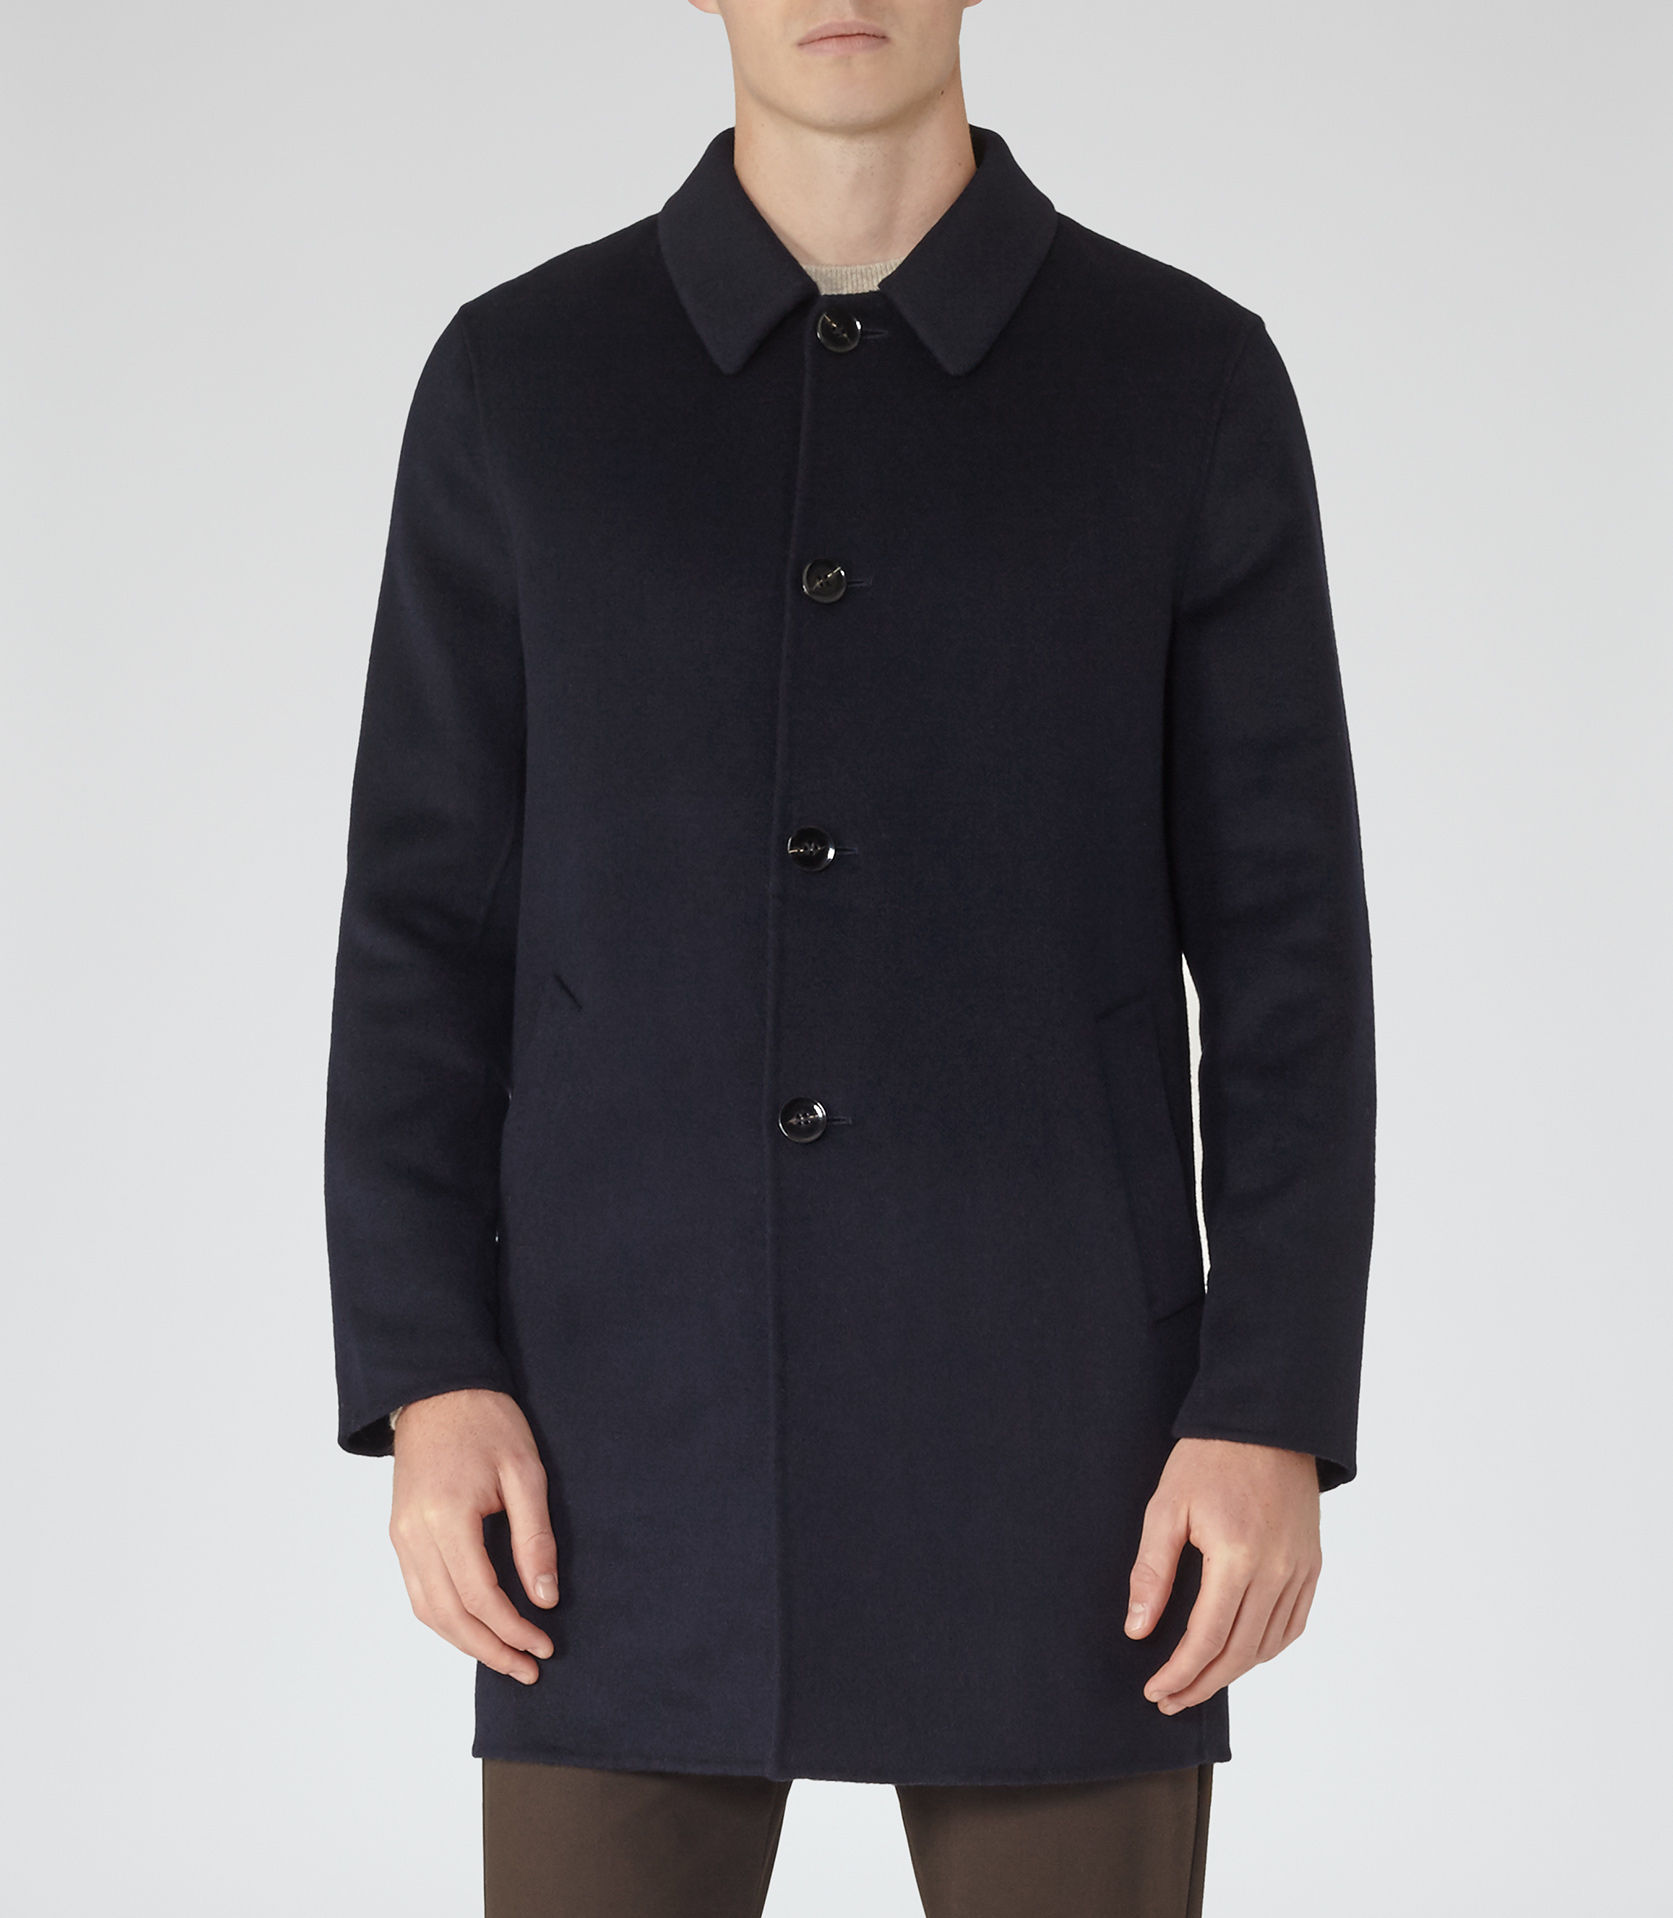 Reiss Claremont Wool Overcoat in Navy (Blue) for Men - Lyst